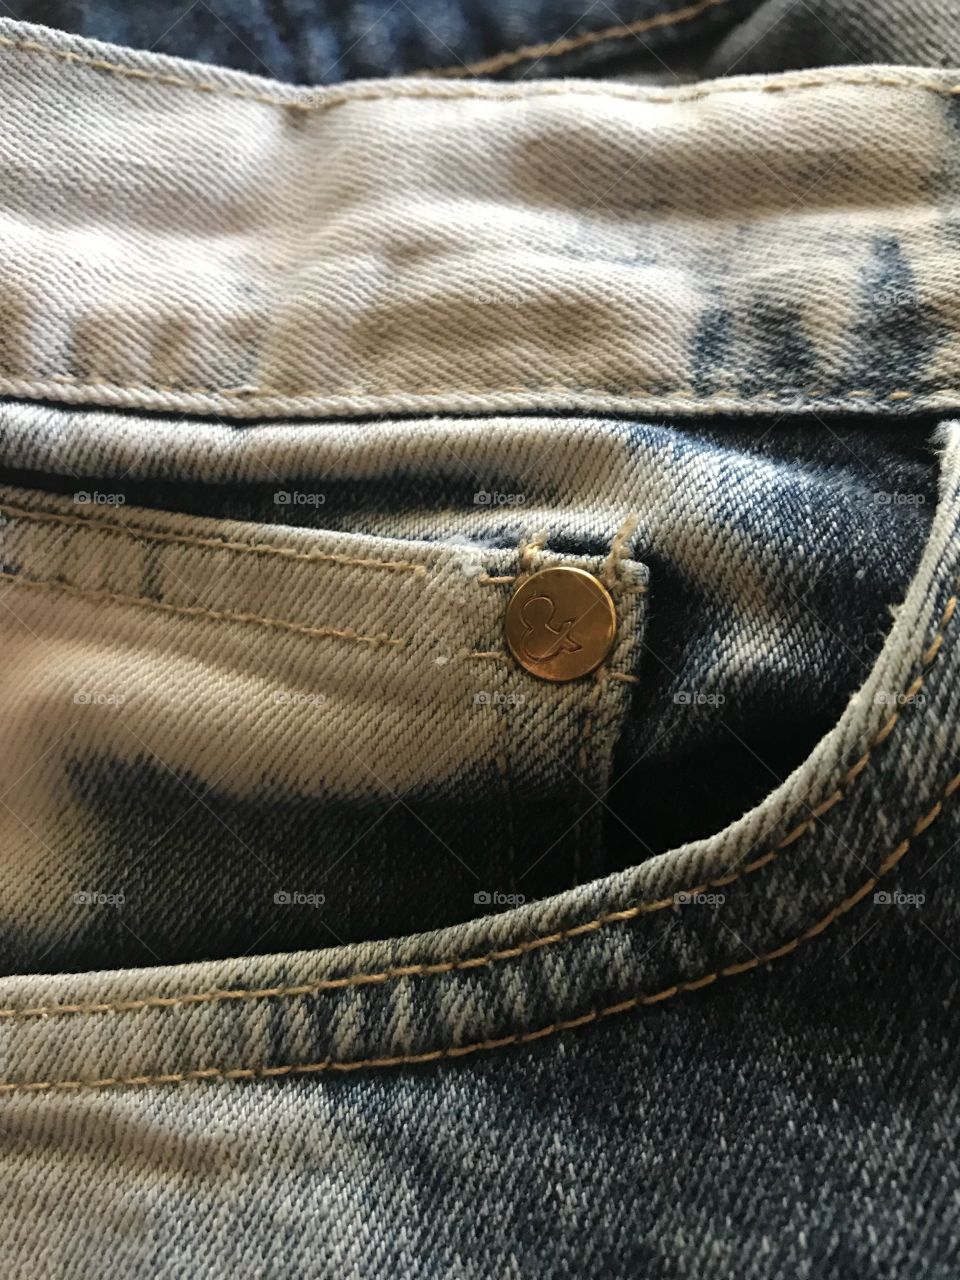 Close up jeans pocket detail fashion